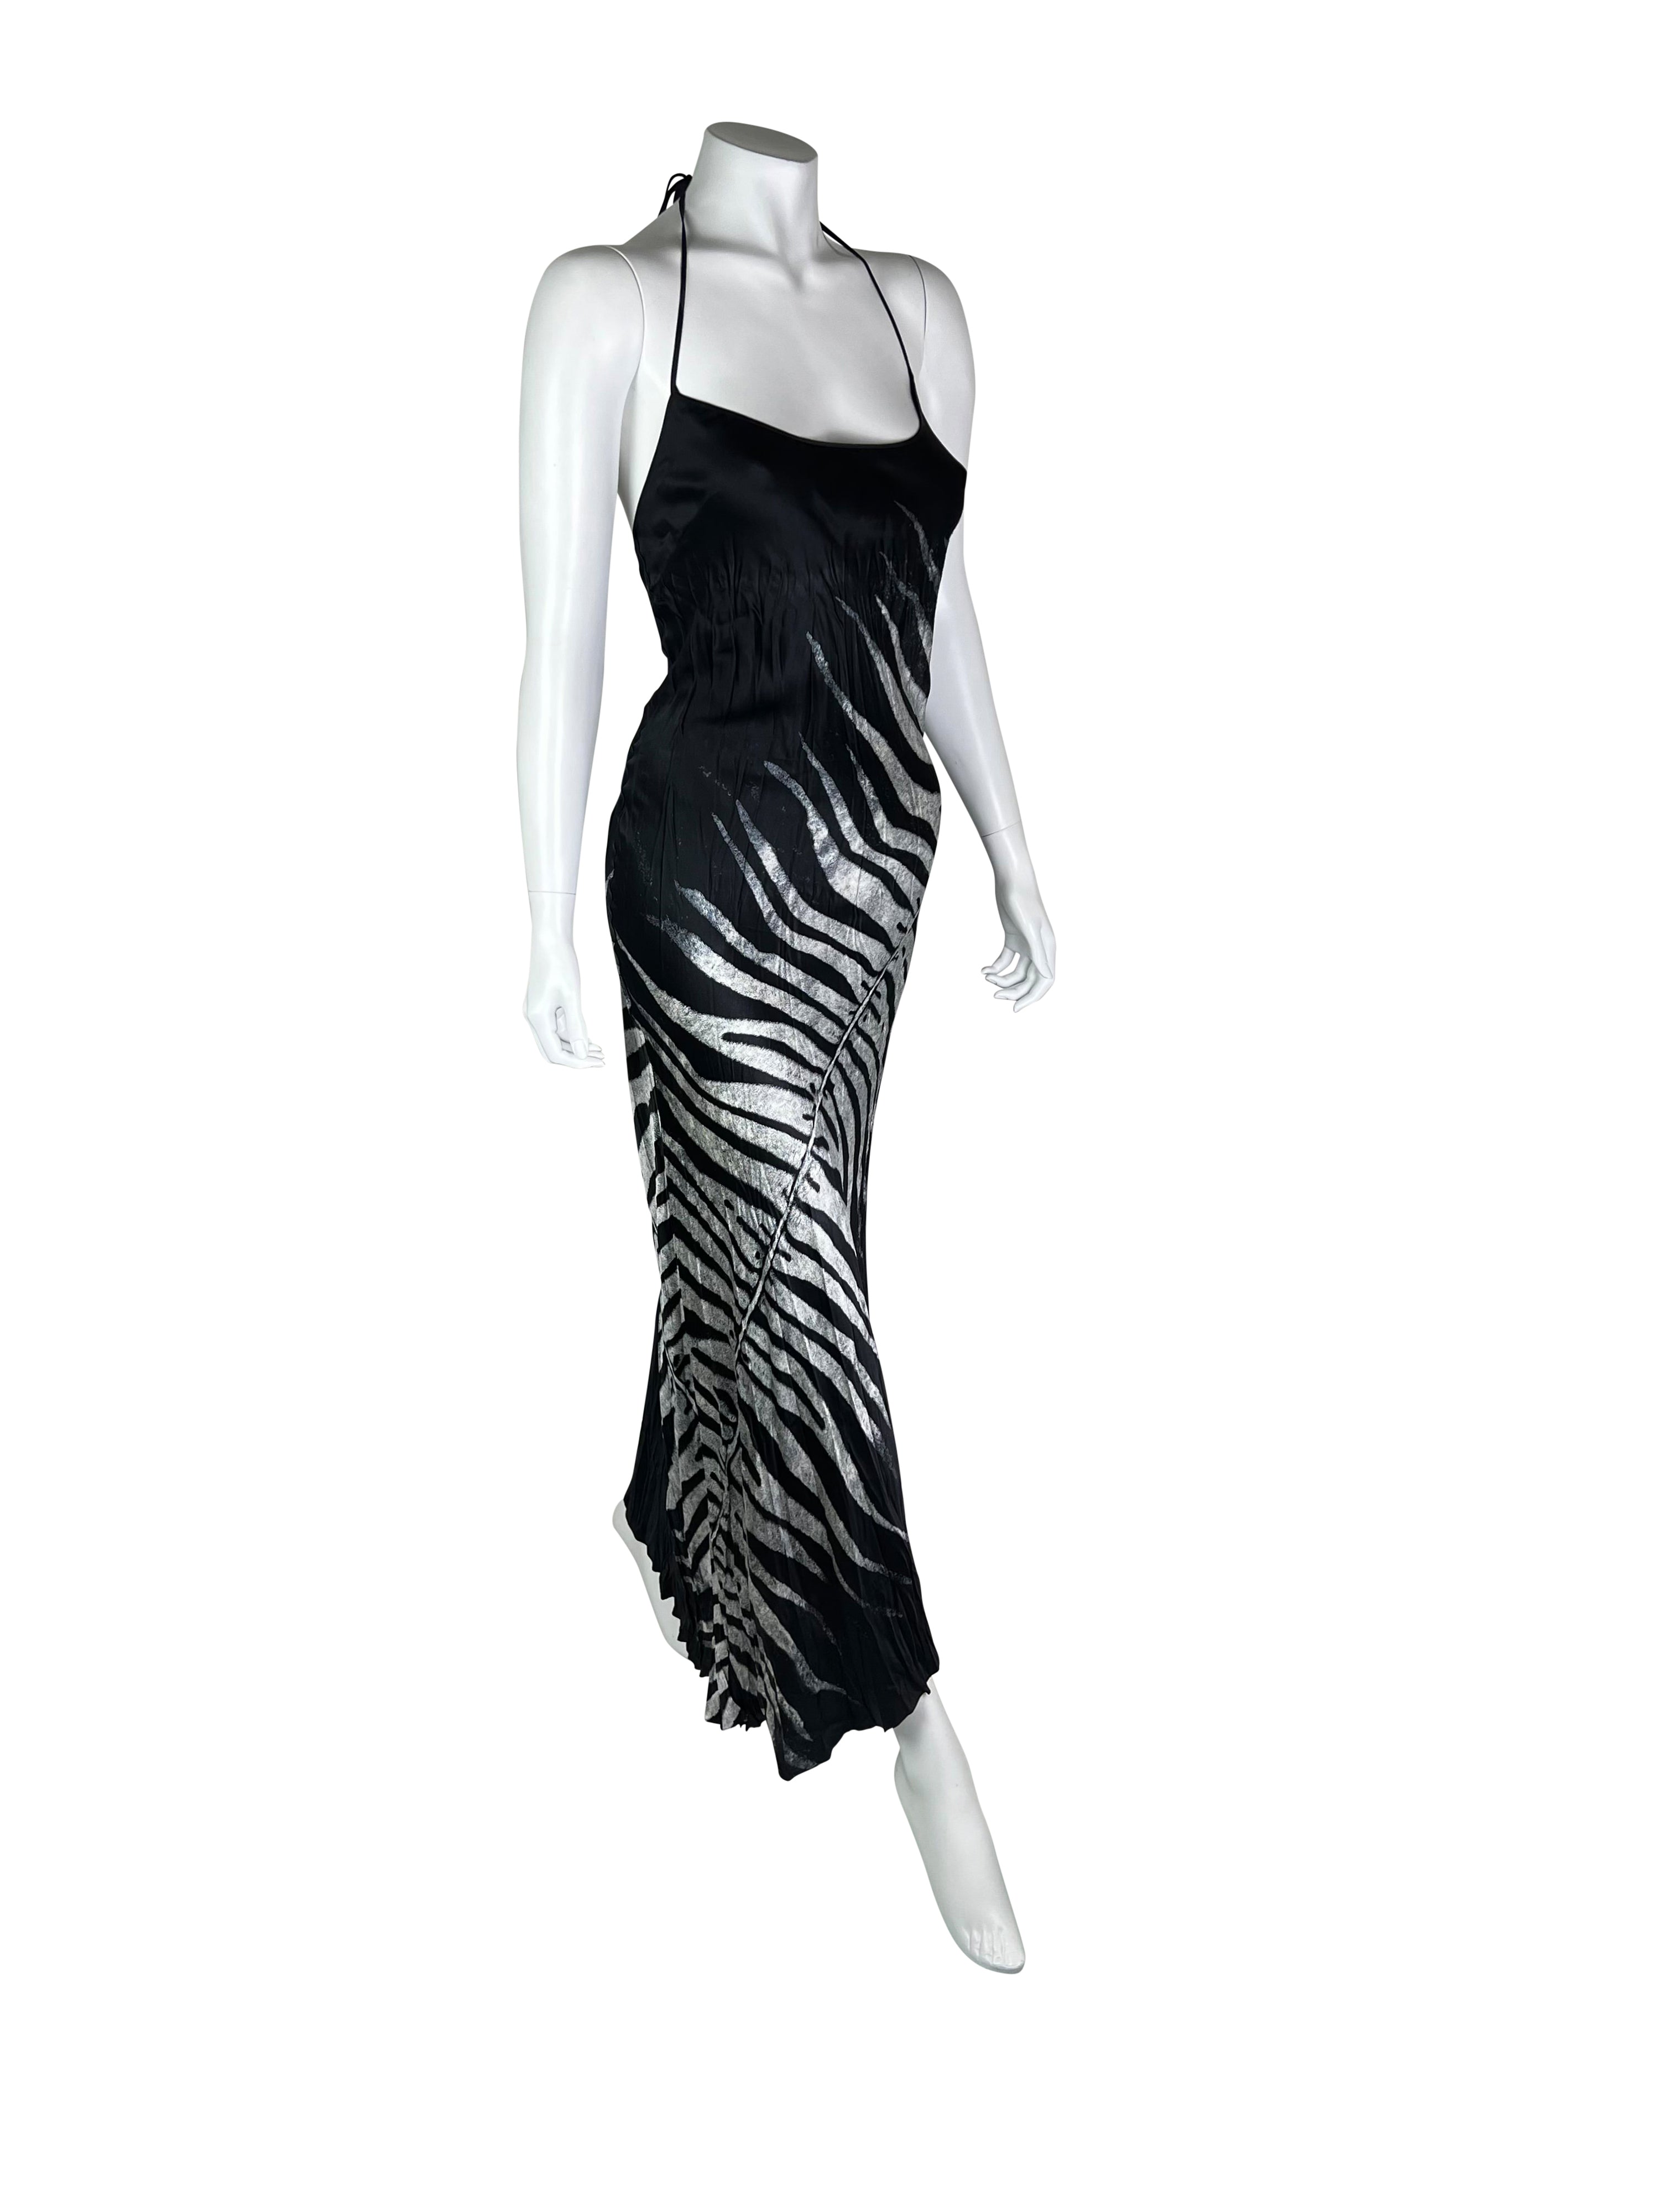 Roberto Cavalli Spring 2000 Printed Silk Dress